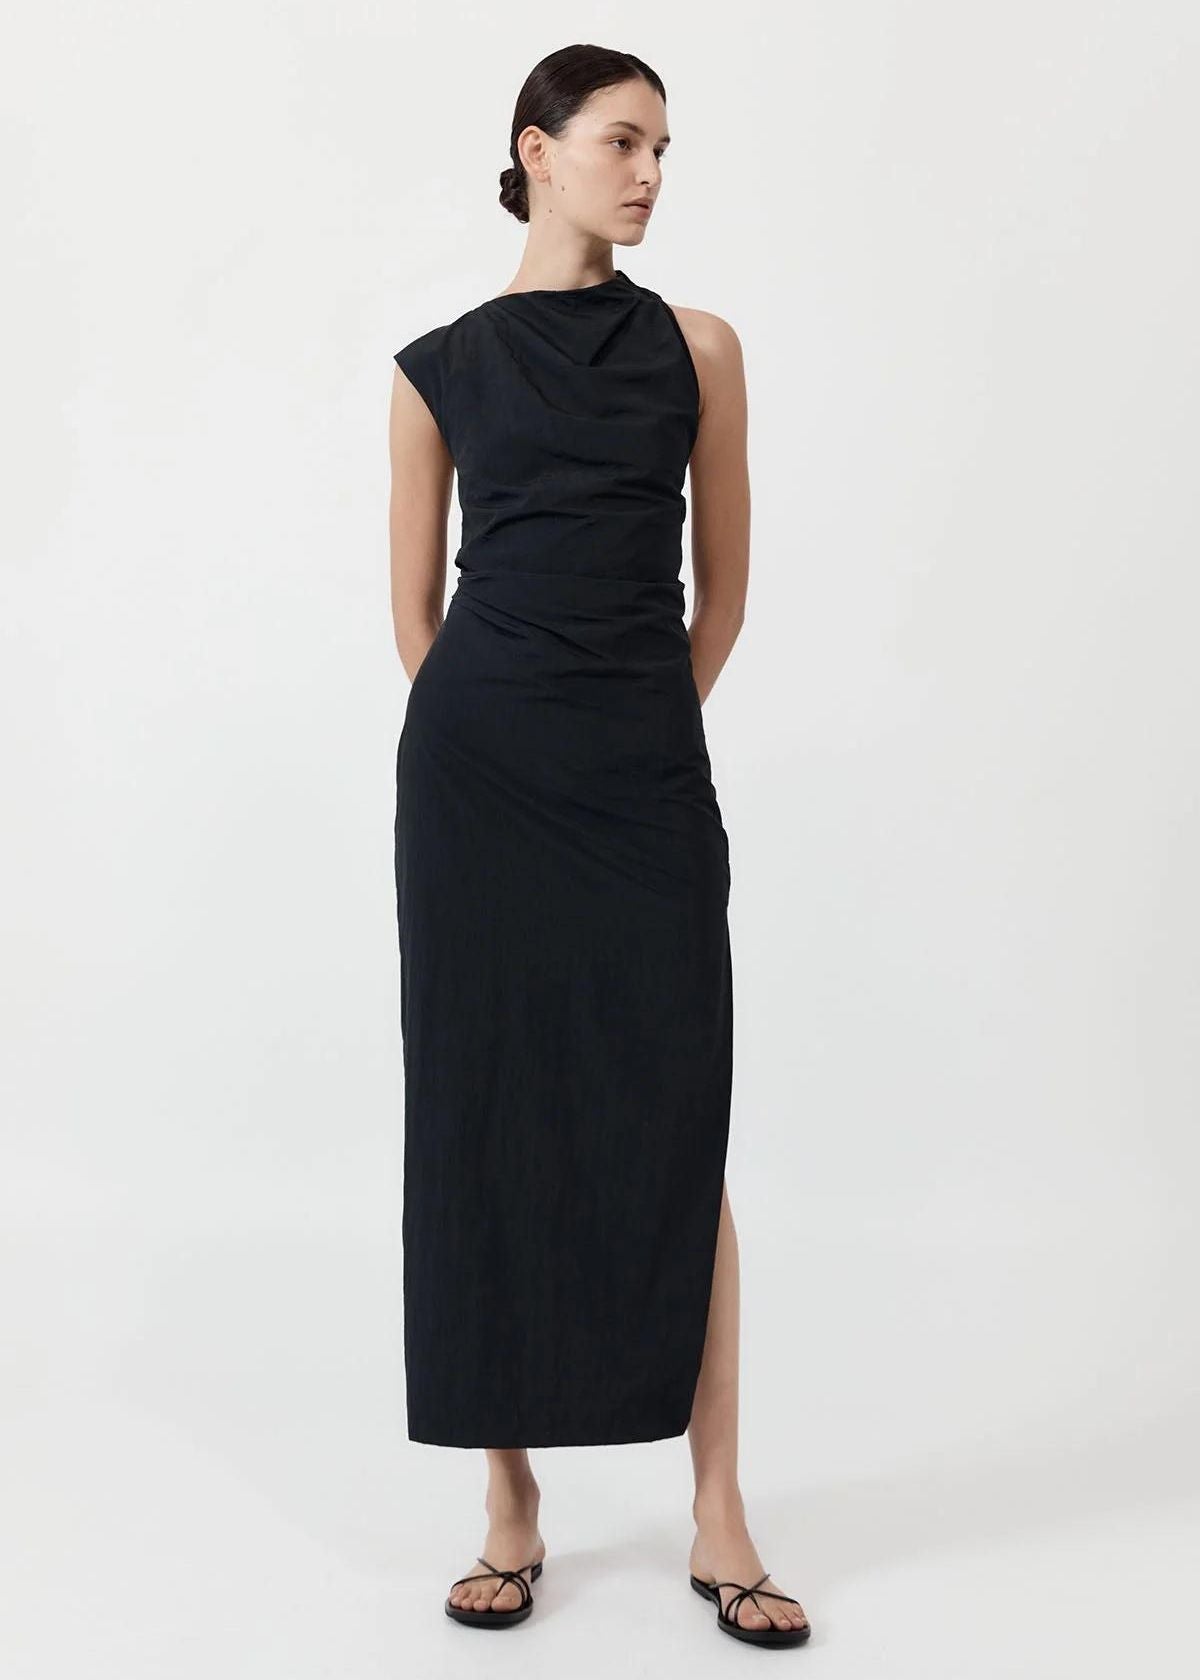 ST. AGNI Asymmetrical Tuck Dress - Black – Carriage House